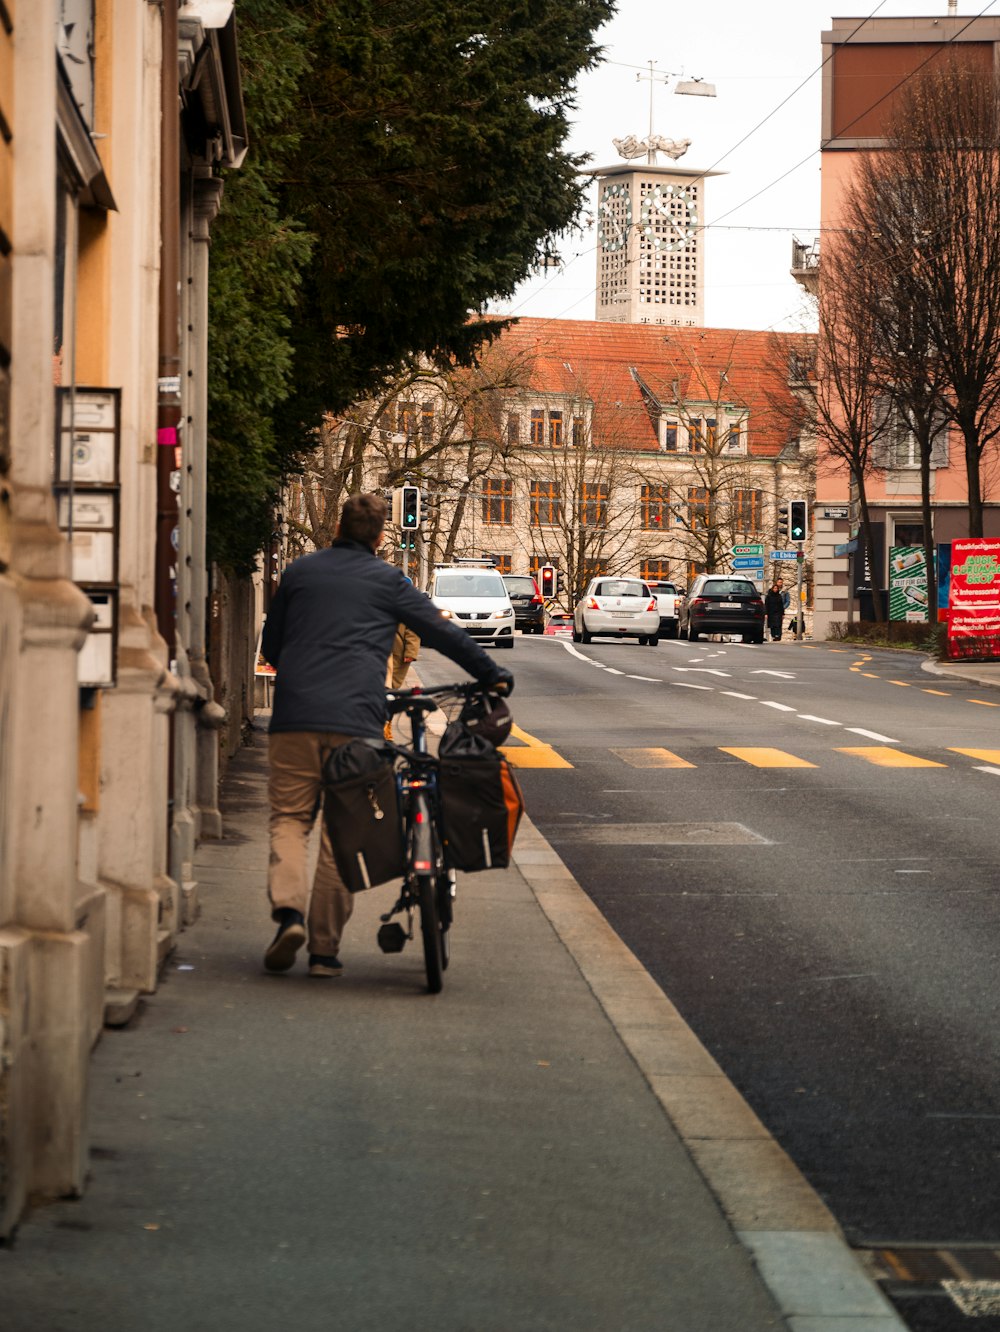 a man riding a bike down a street next to tall buildings